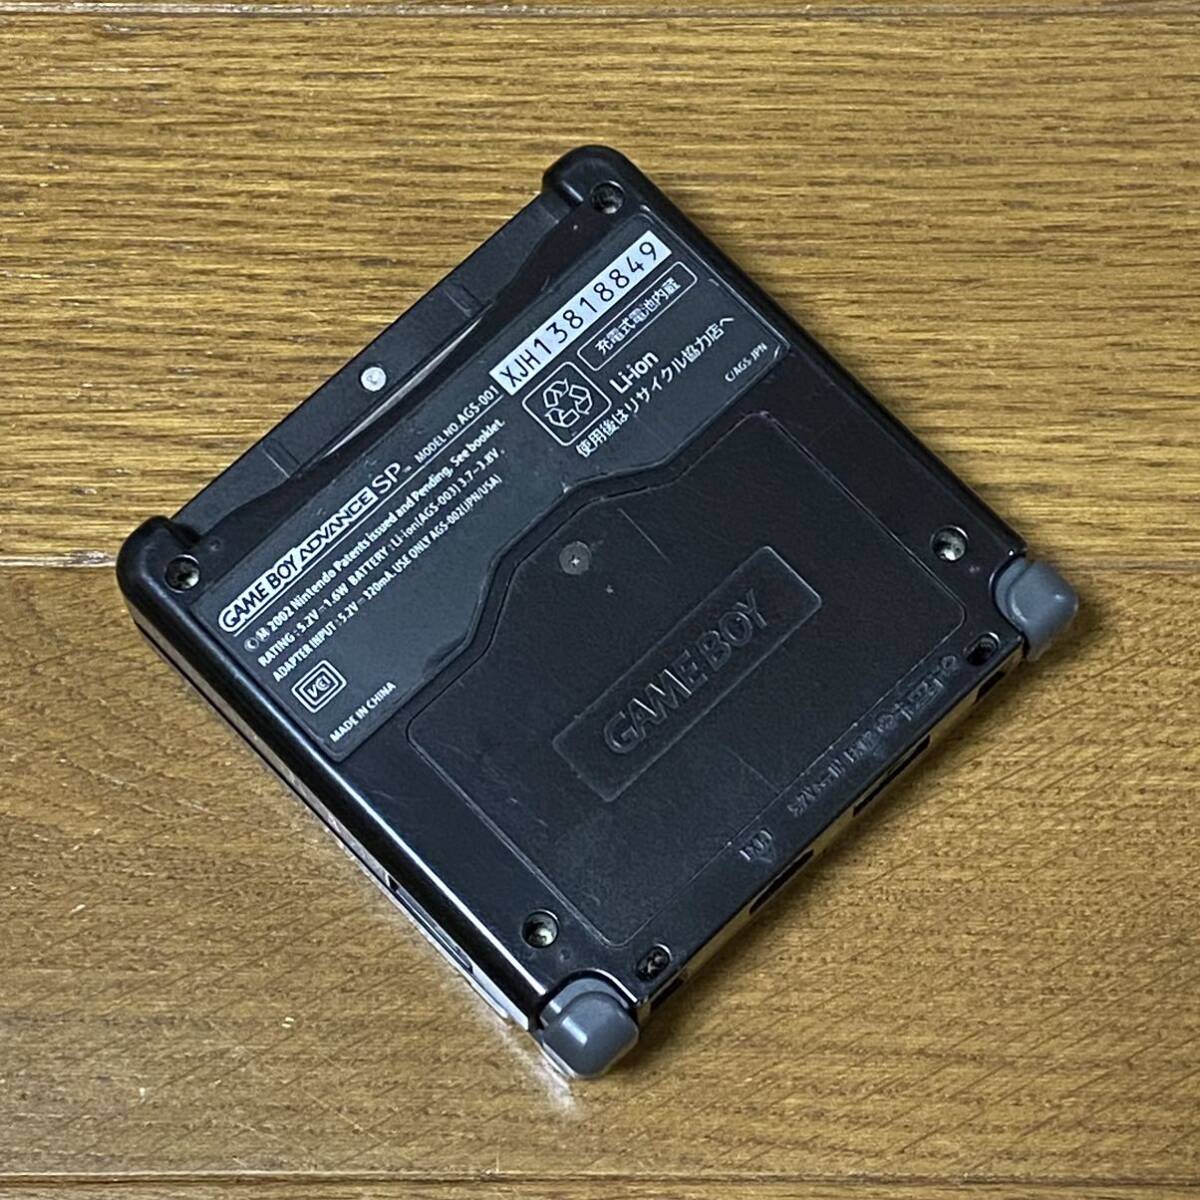 Nintendo nintendo Game Boy Advance SP GAMEBOY ADVANCE onyx black 